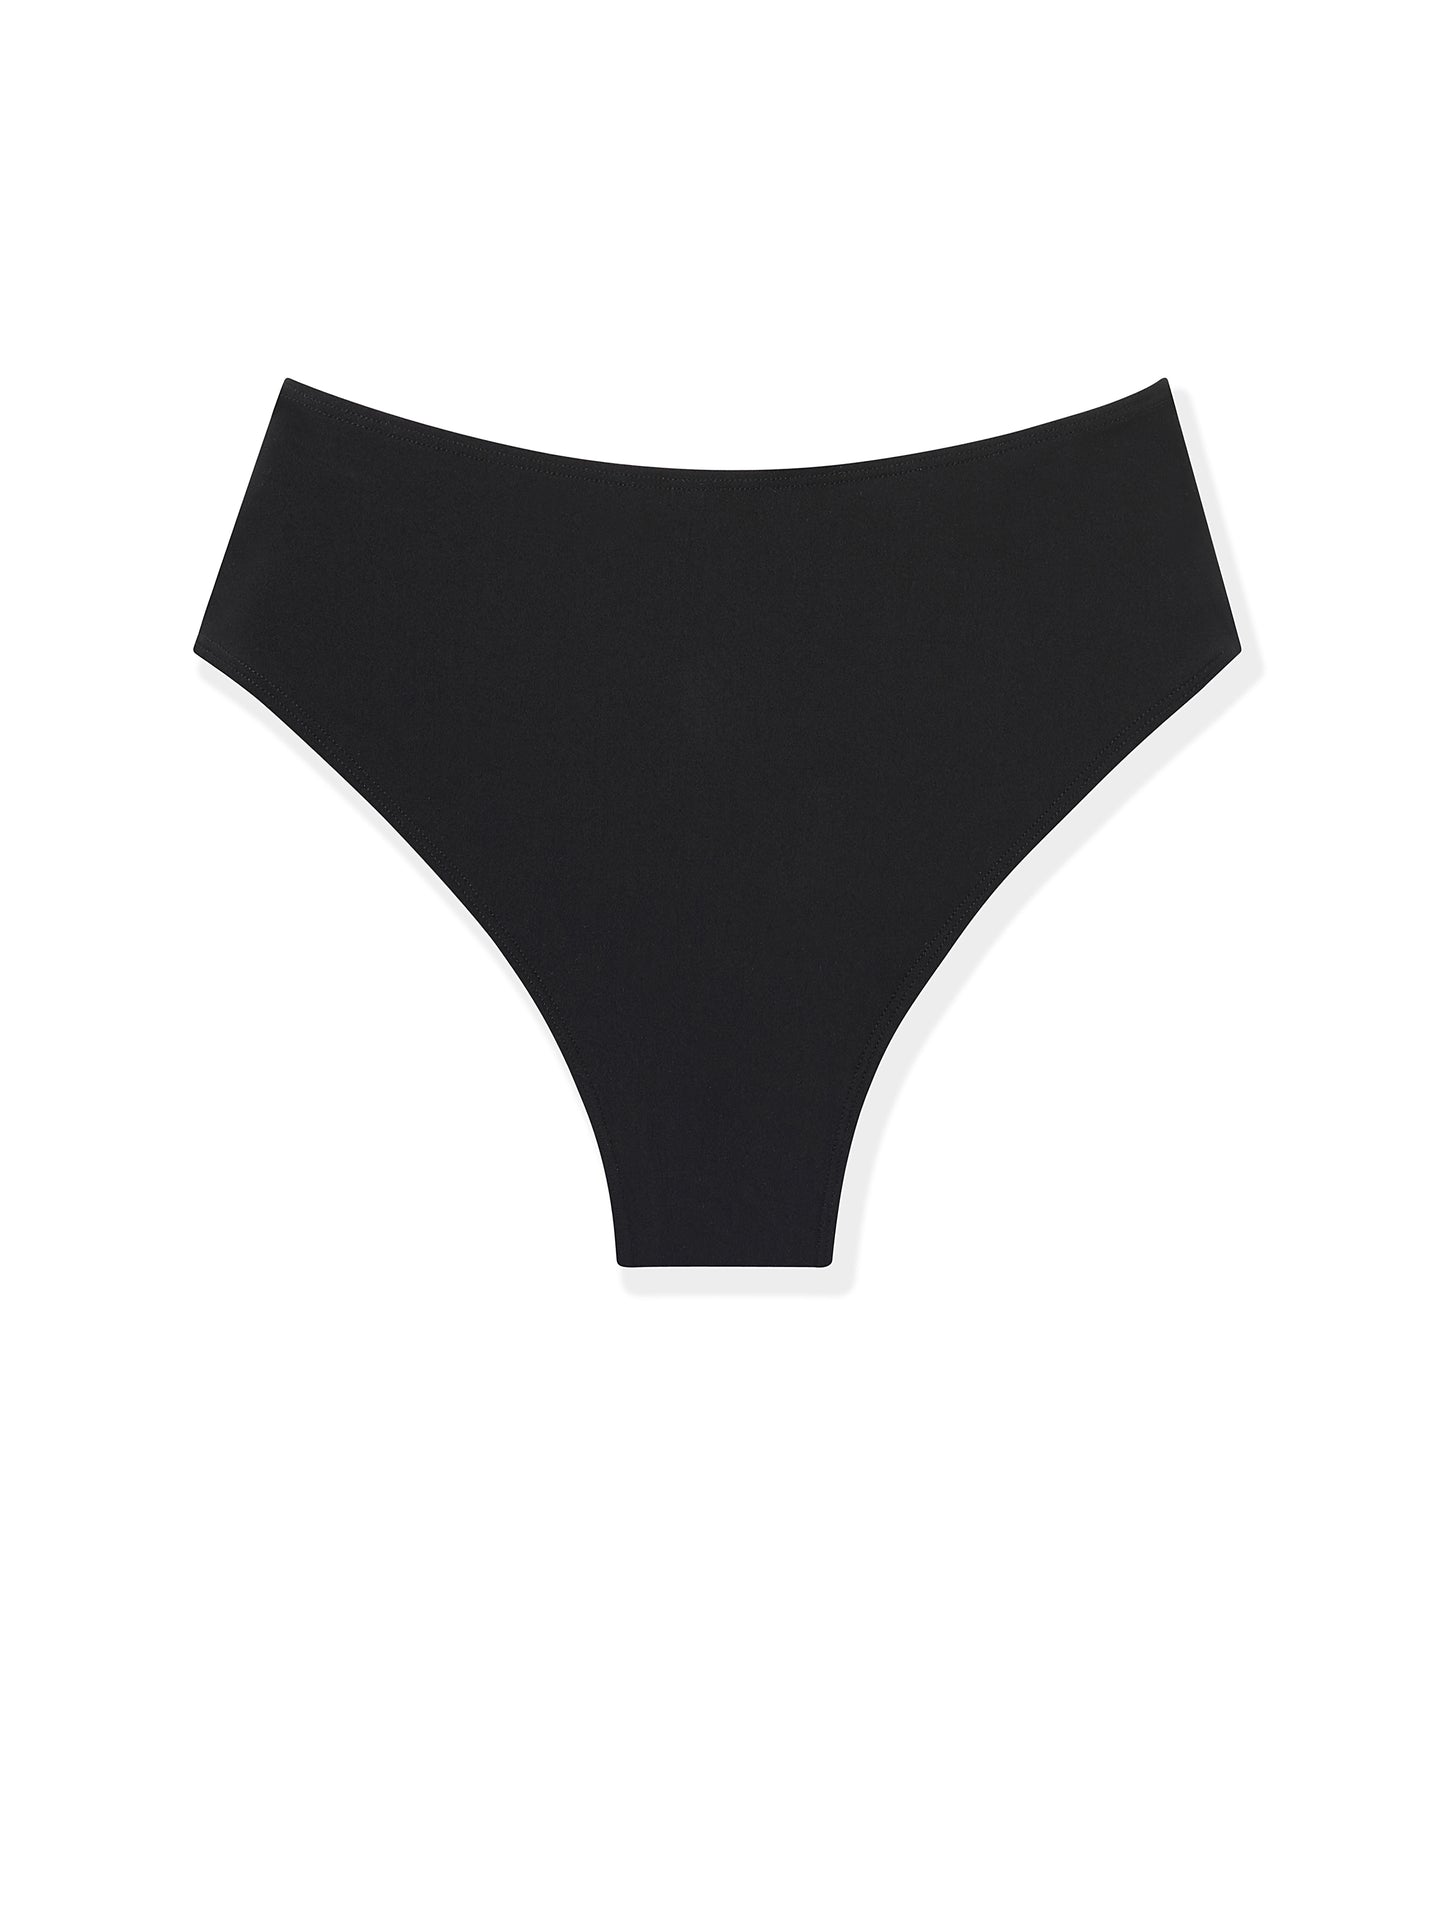 ALYA UNDERWEAR Women's Bikini Panties - 3 Pieces - (S, M, L, XL